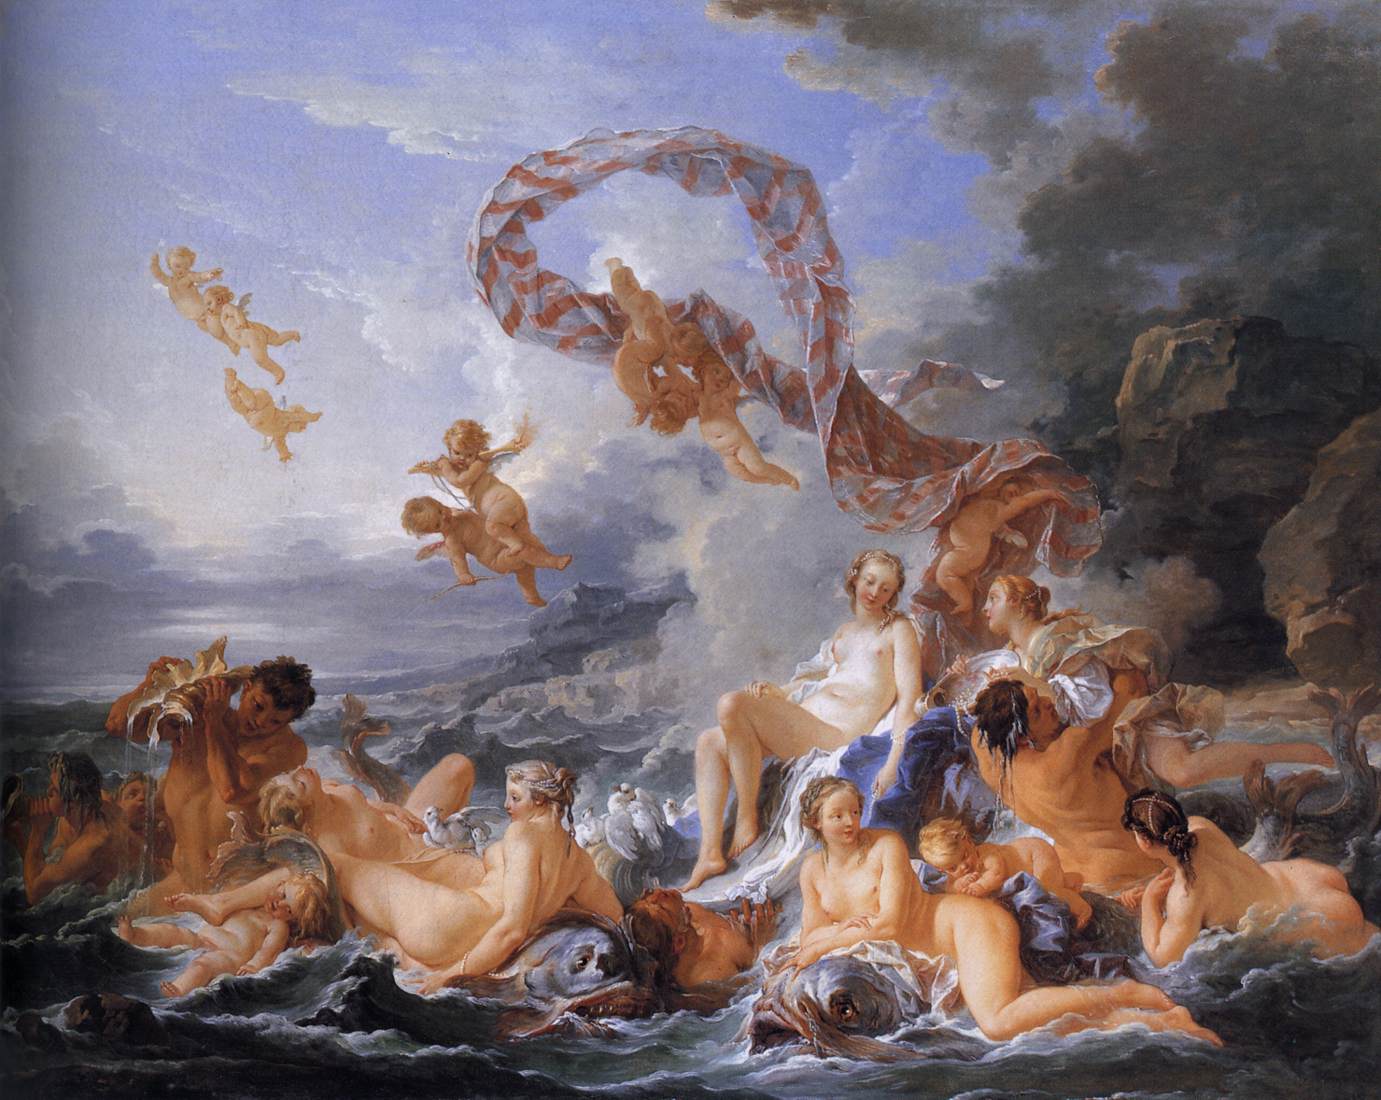 [François+BOUCHER+The+Birth+of+Venus+1740.jpg]